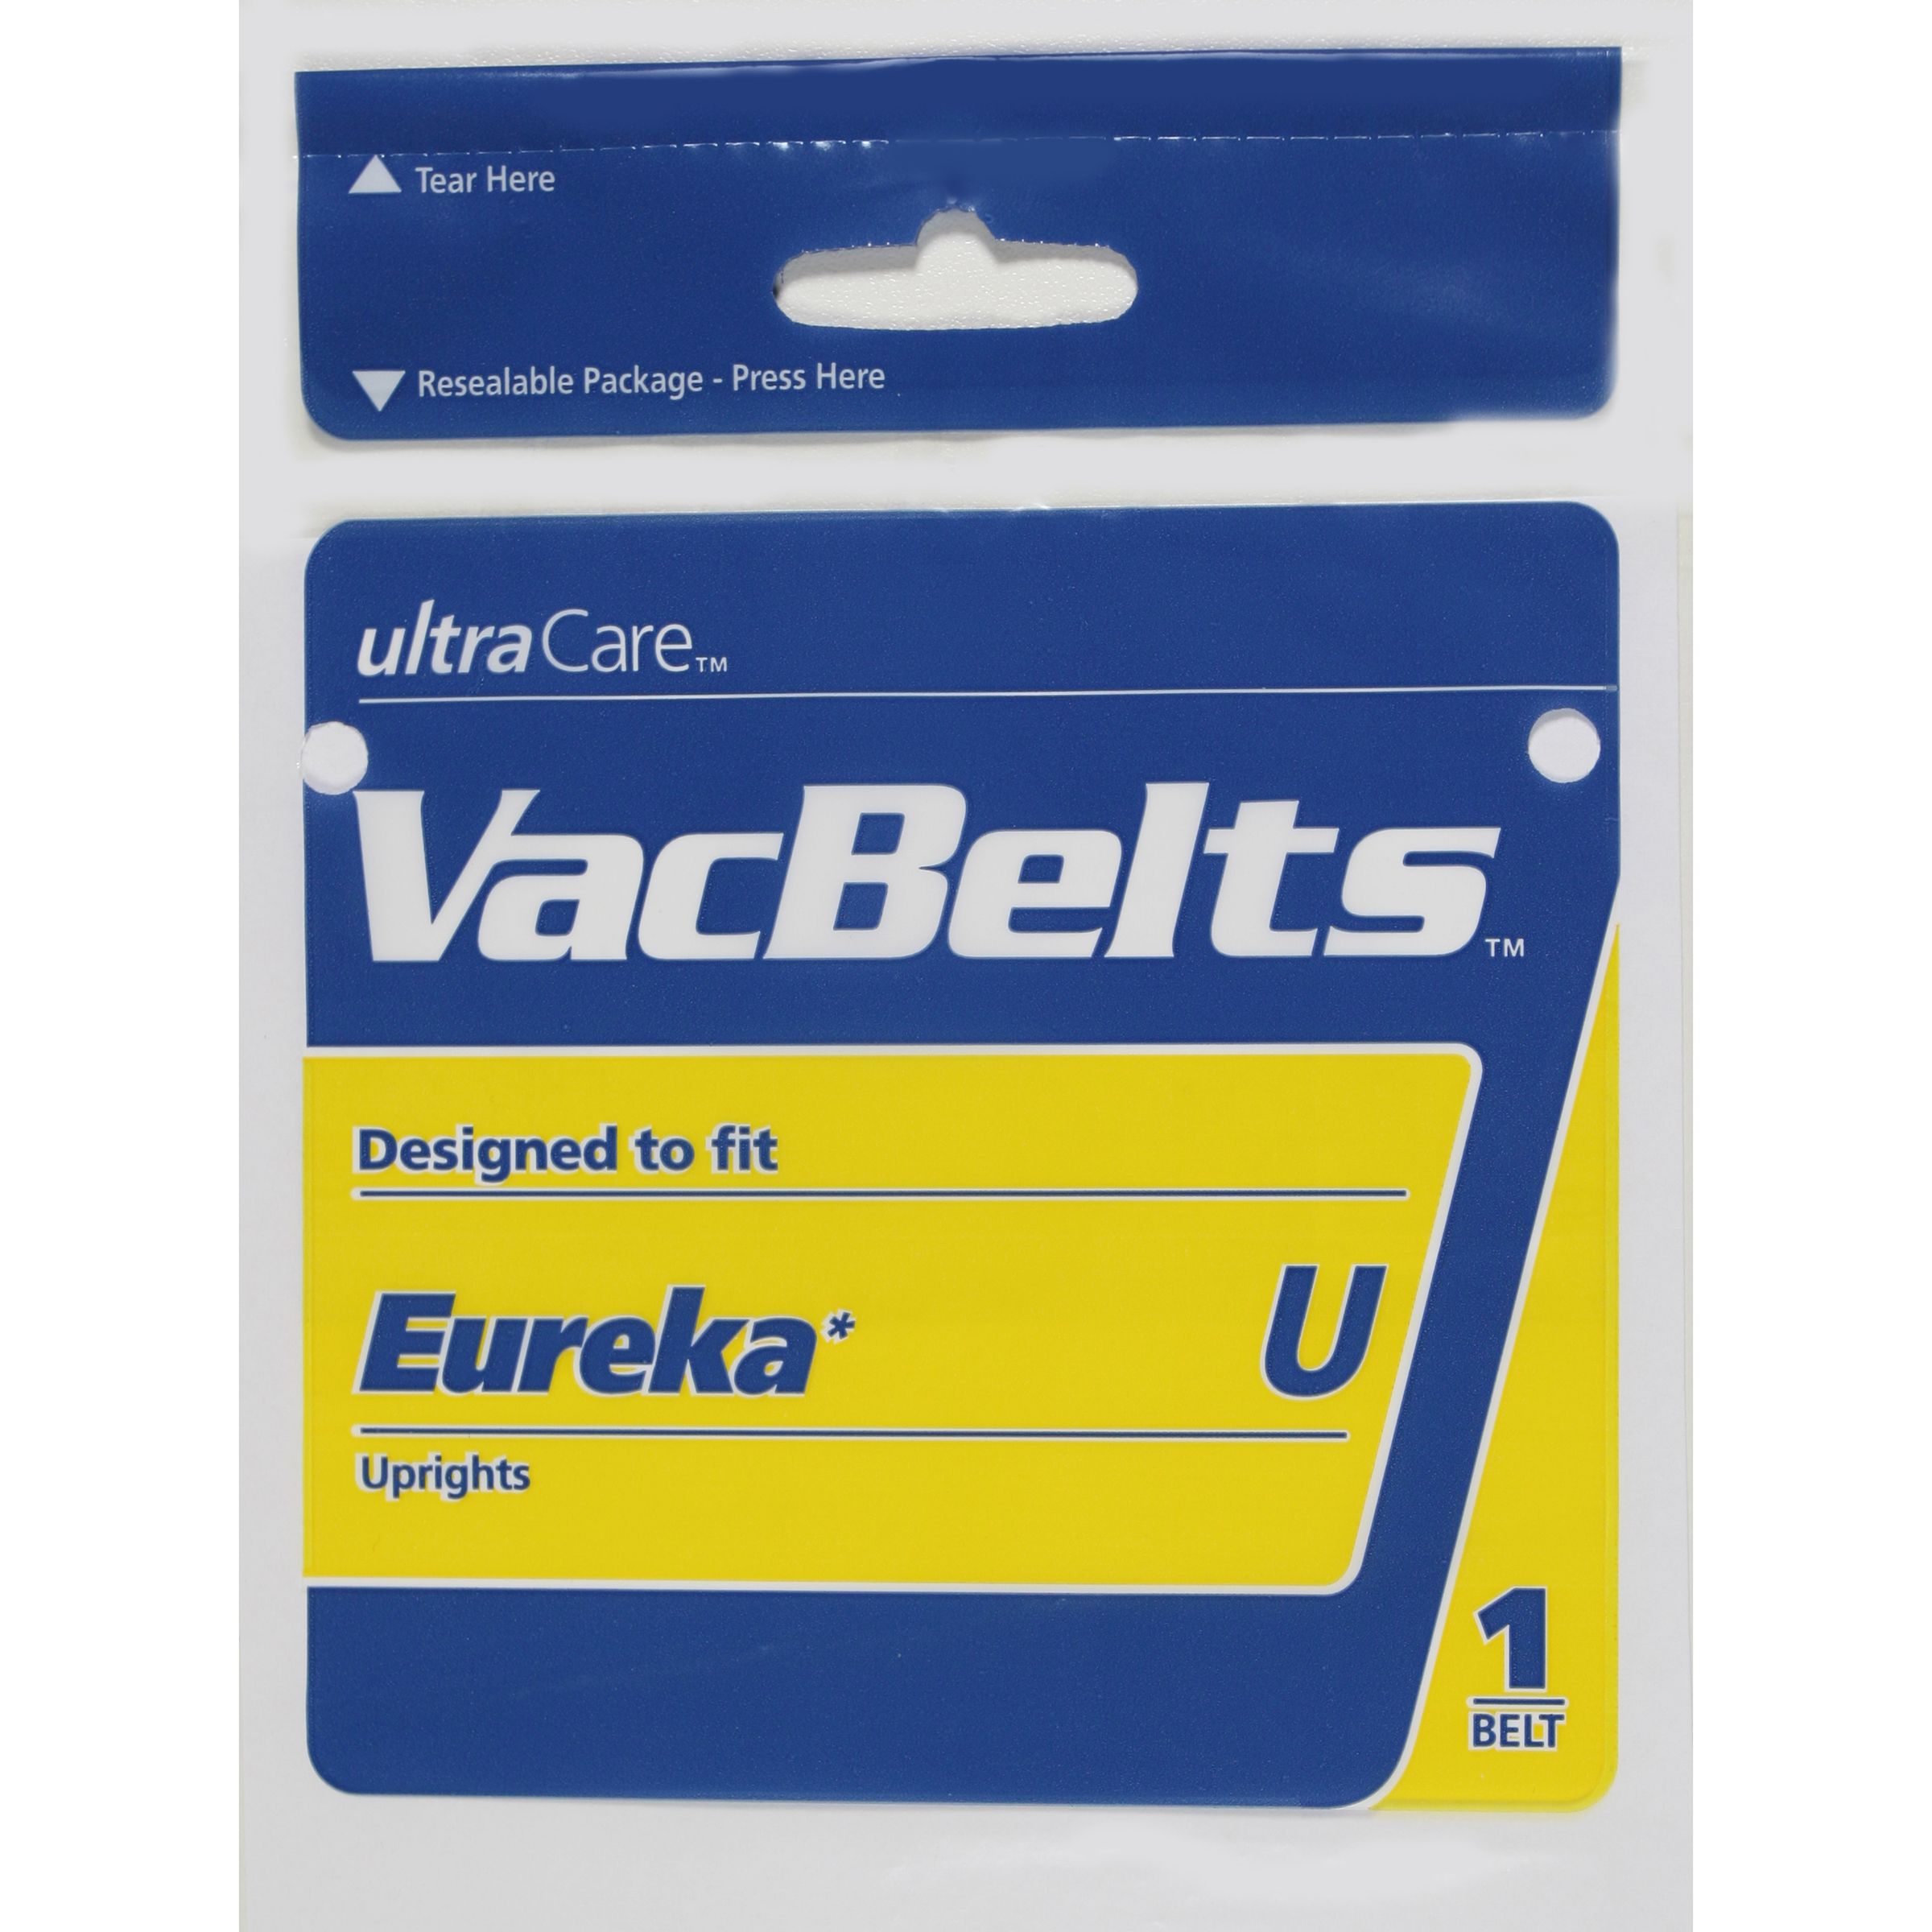 UltraCare 610178 VacBelts for Eureka Type U